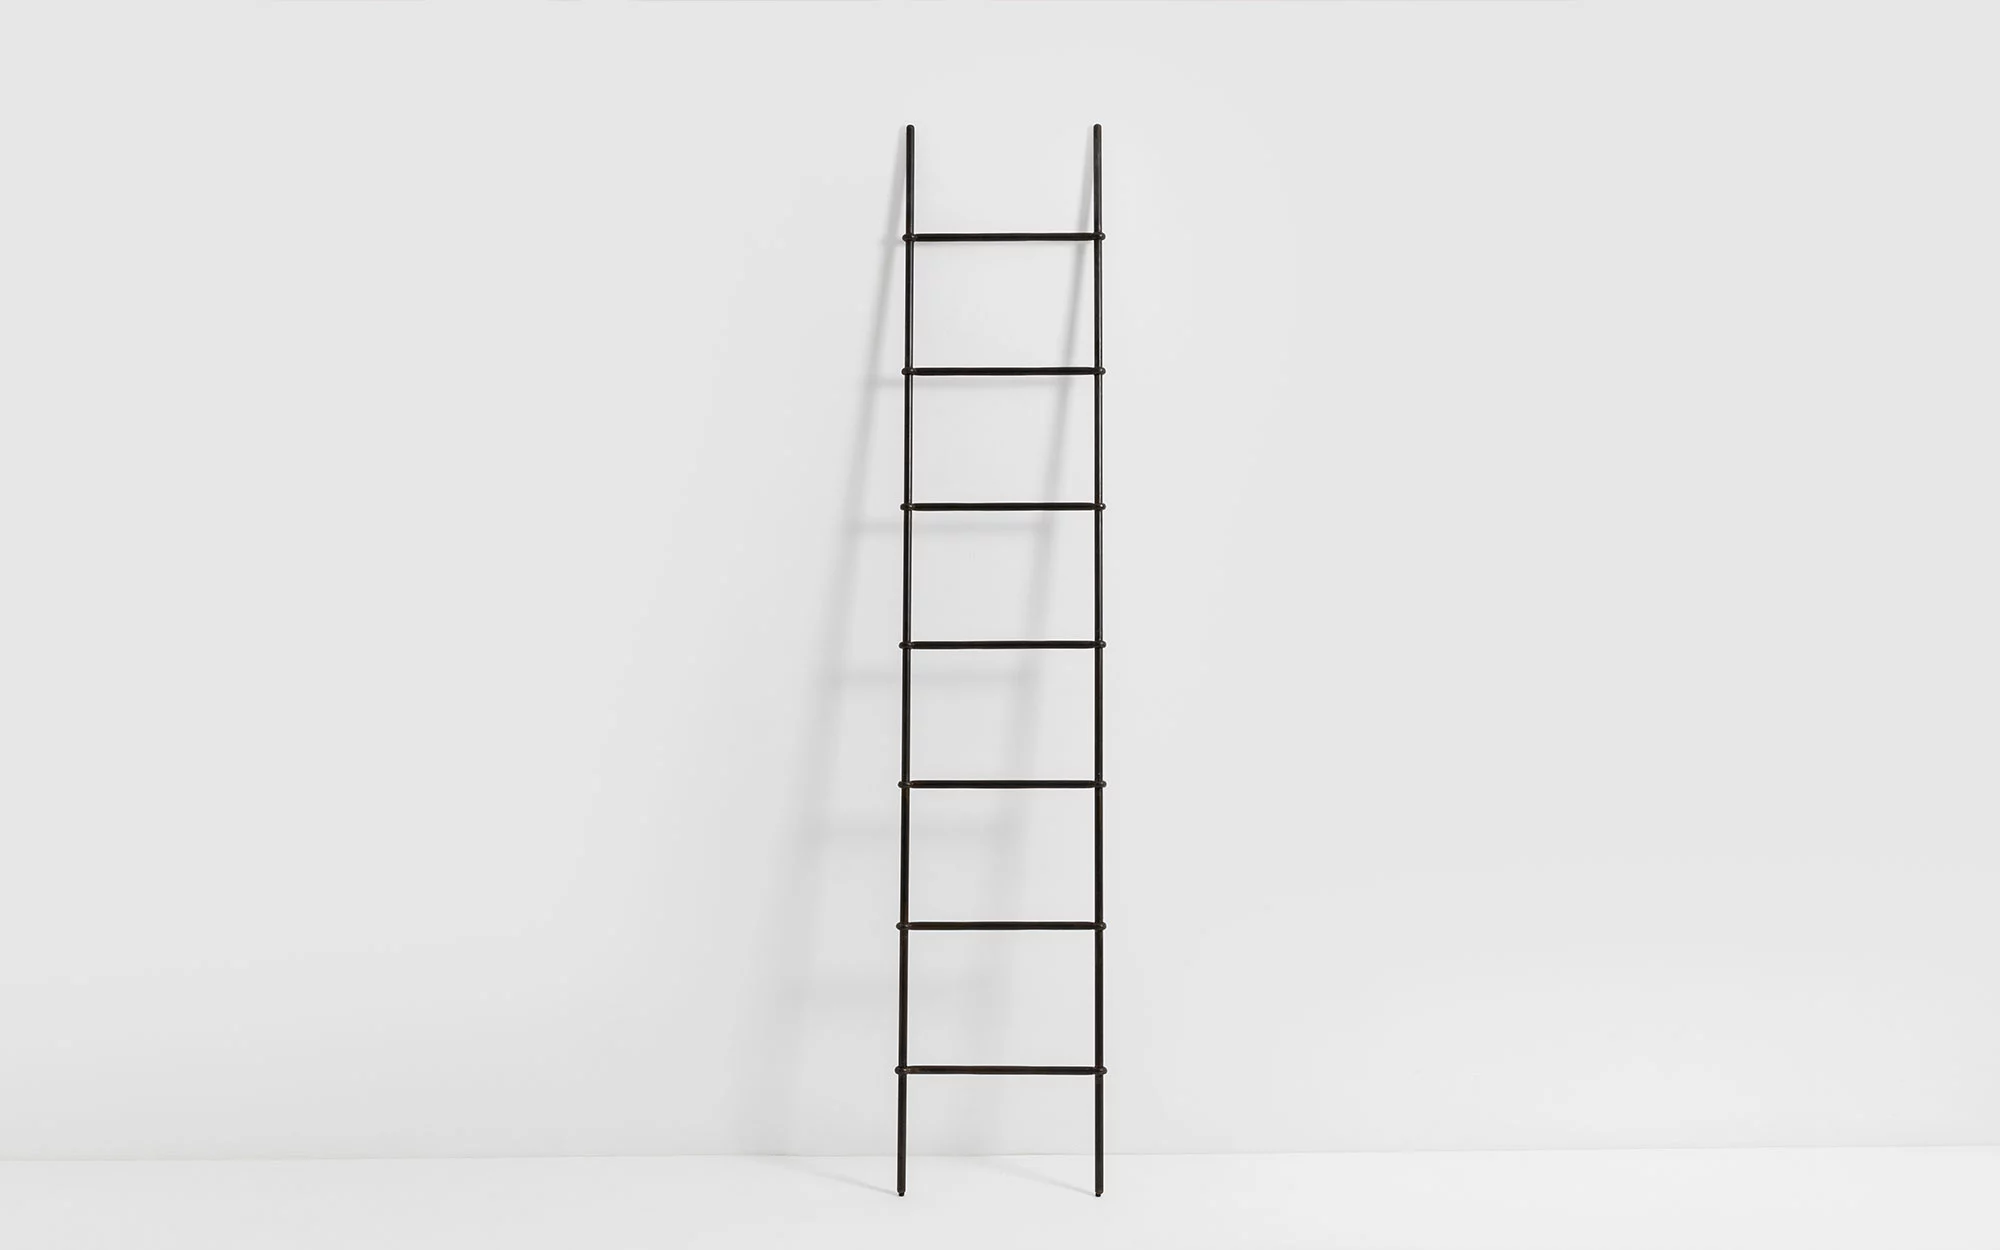 Ciel ladder - Ronan and Erwan Bouroullec - .